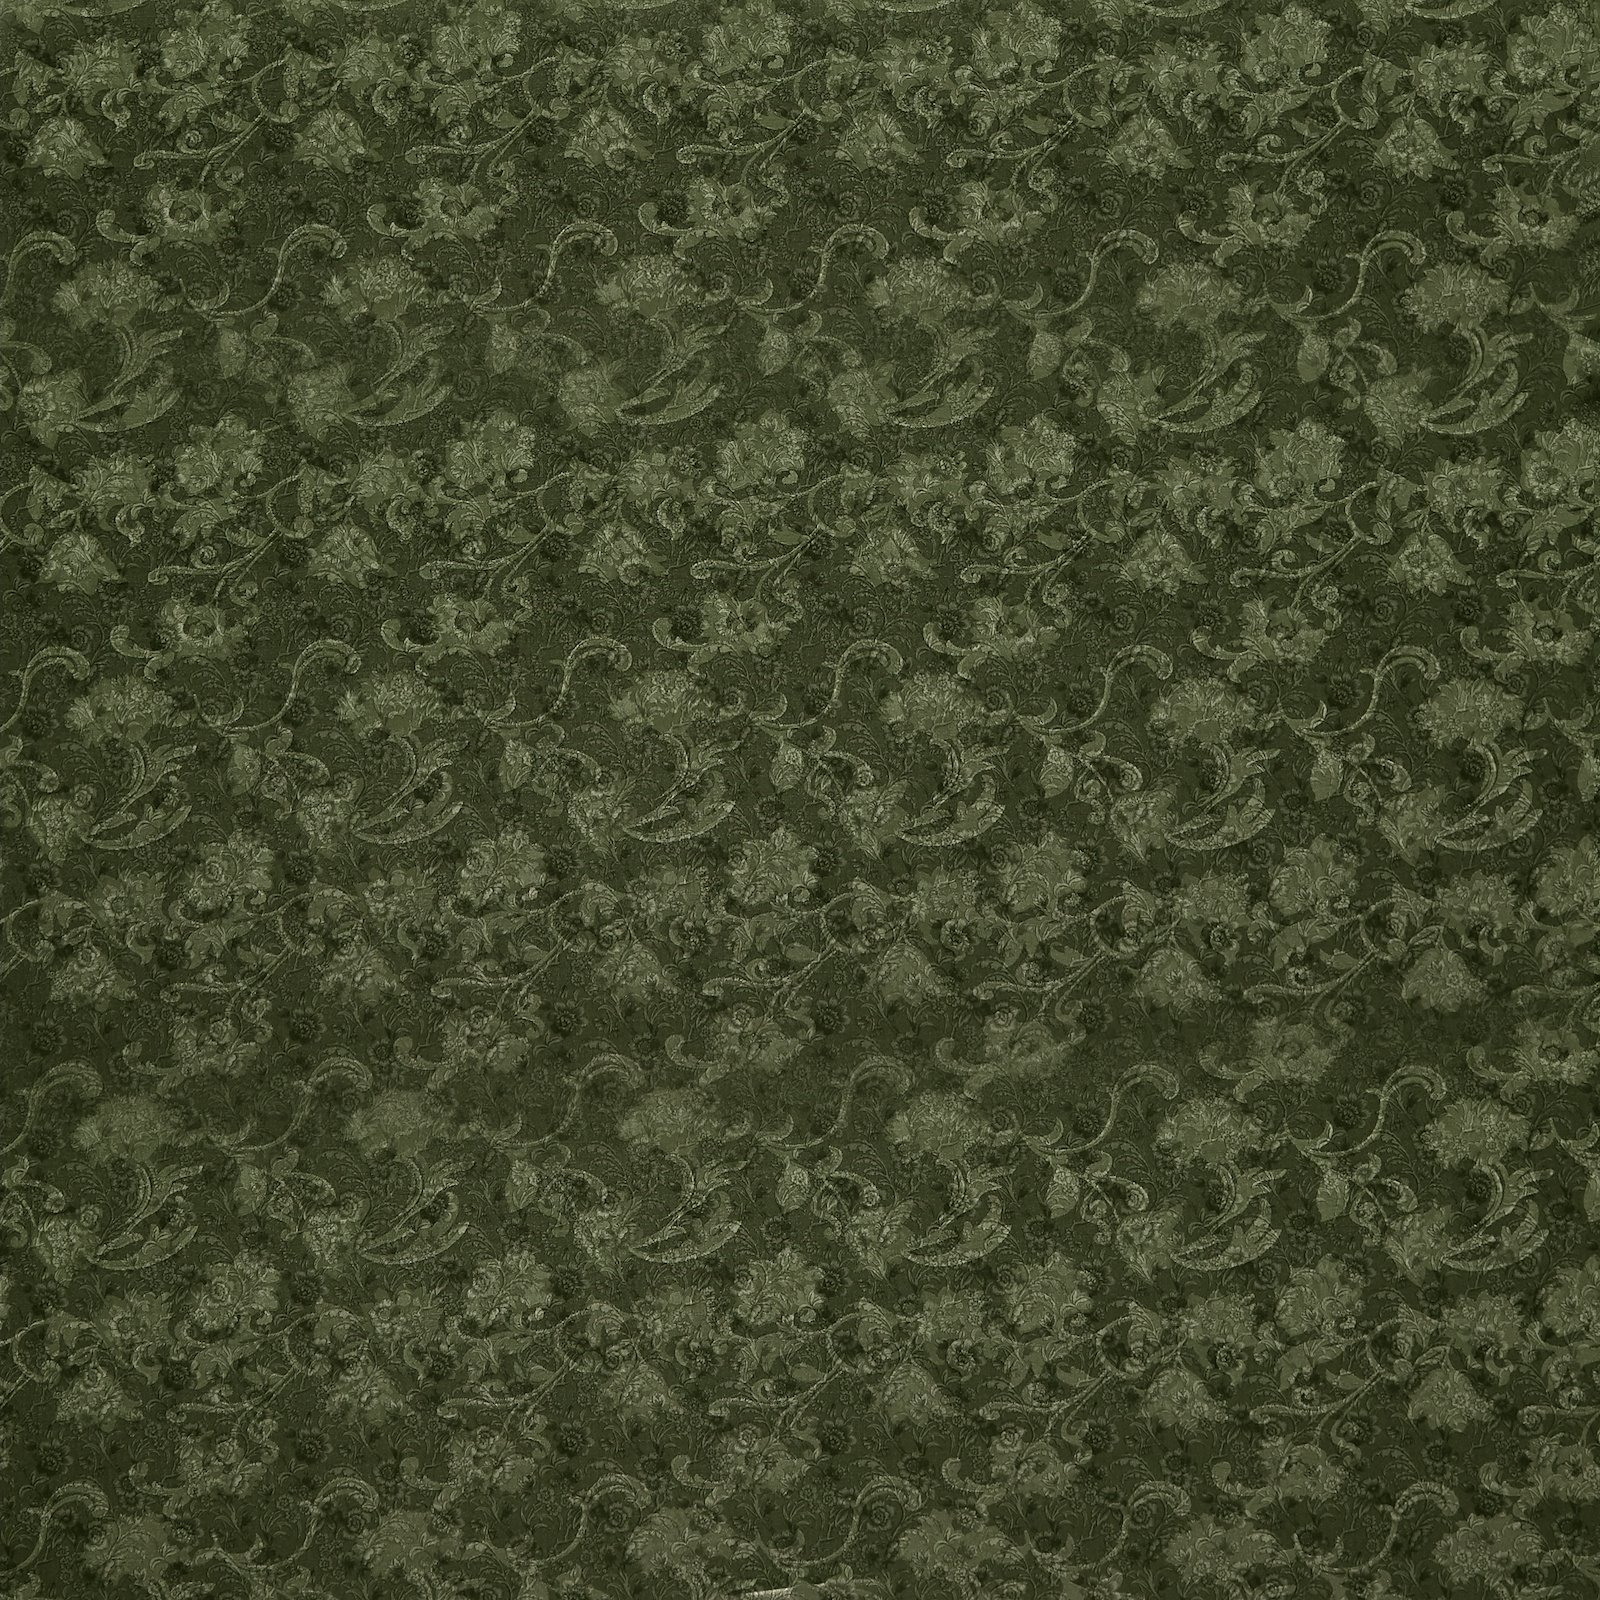 Jacquard gewebt grün mit Blumendruck 670293_pack_sp